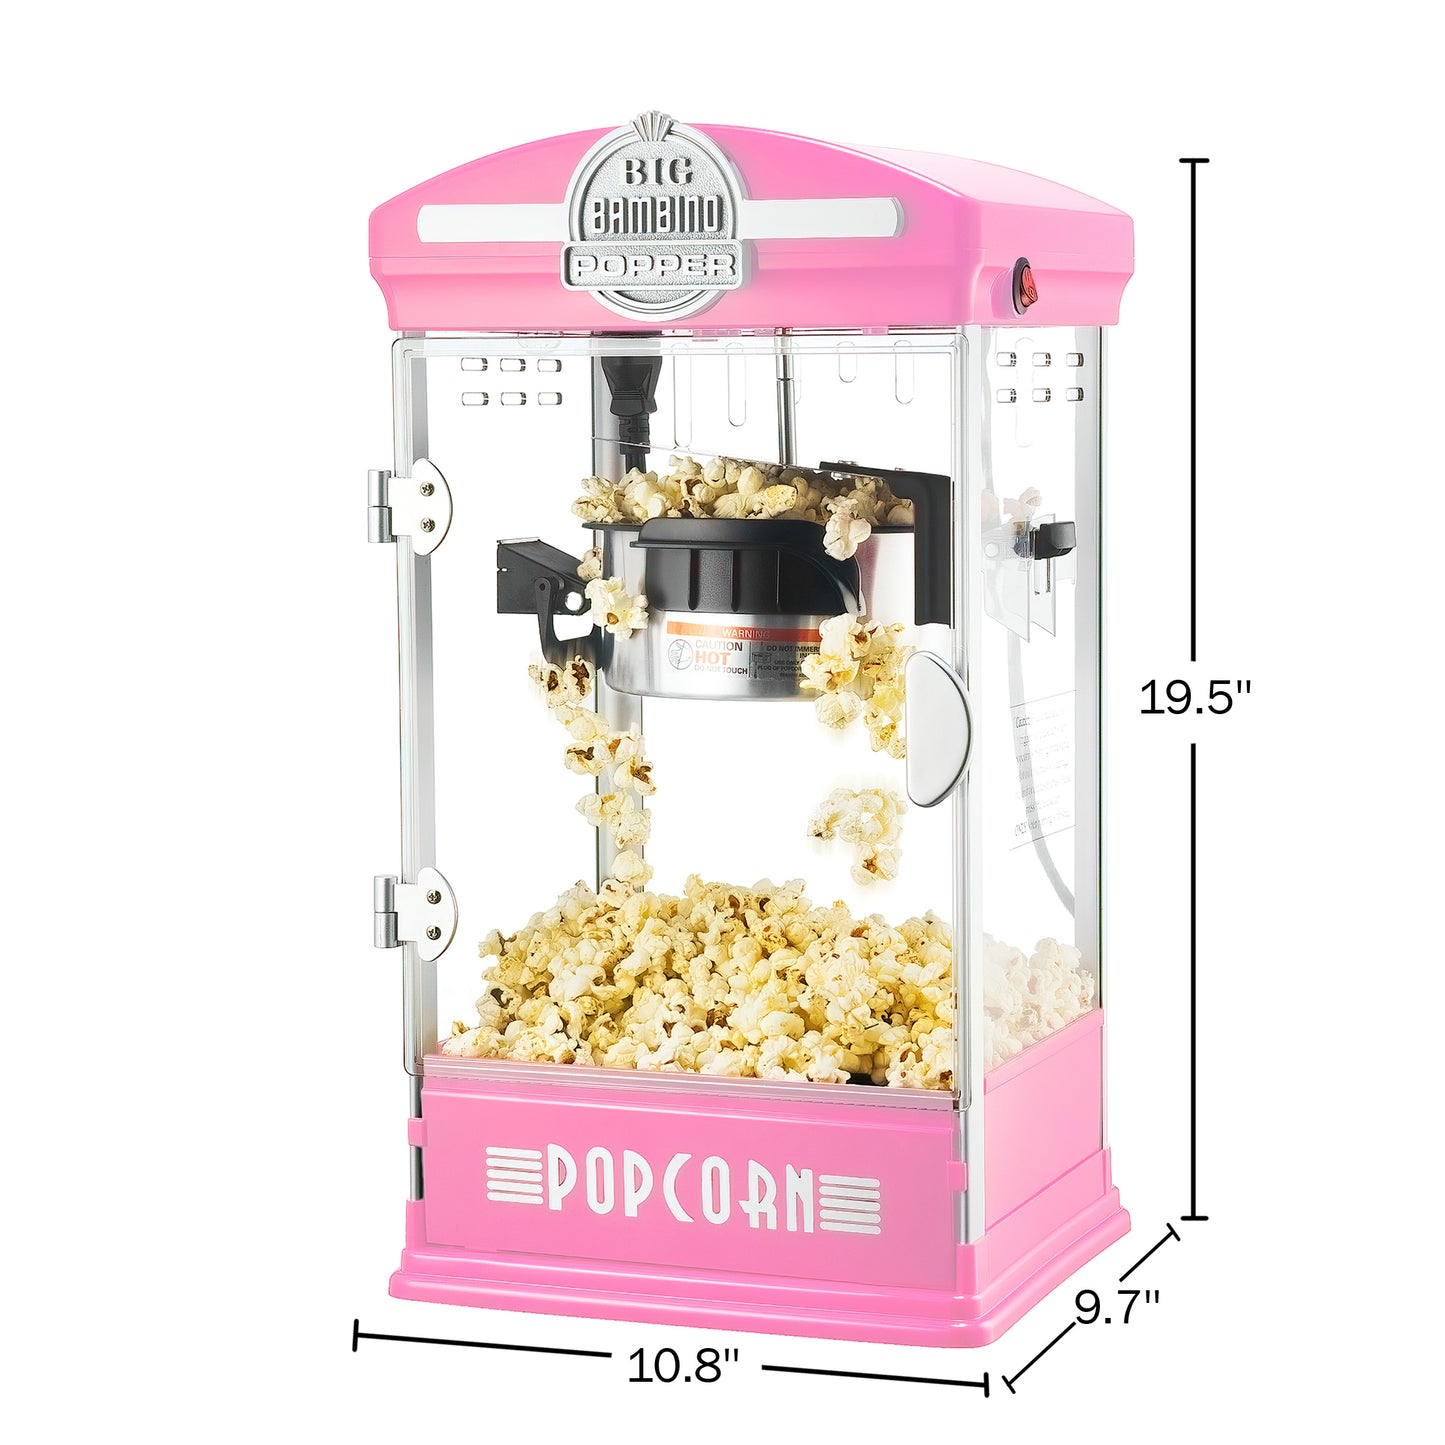 Big Bambino Countertop Popcorn Machine with 4 Ounce Kettle - Pink